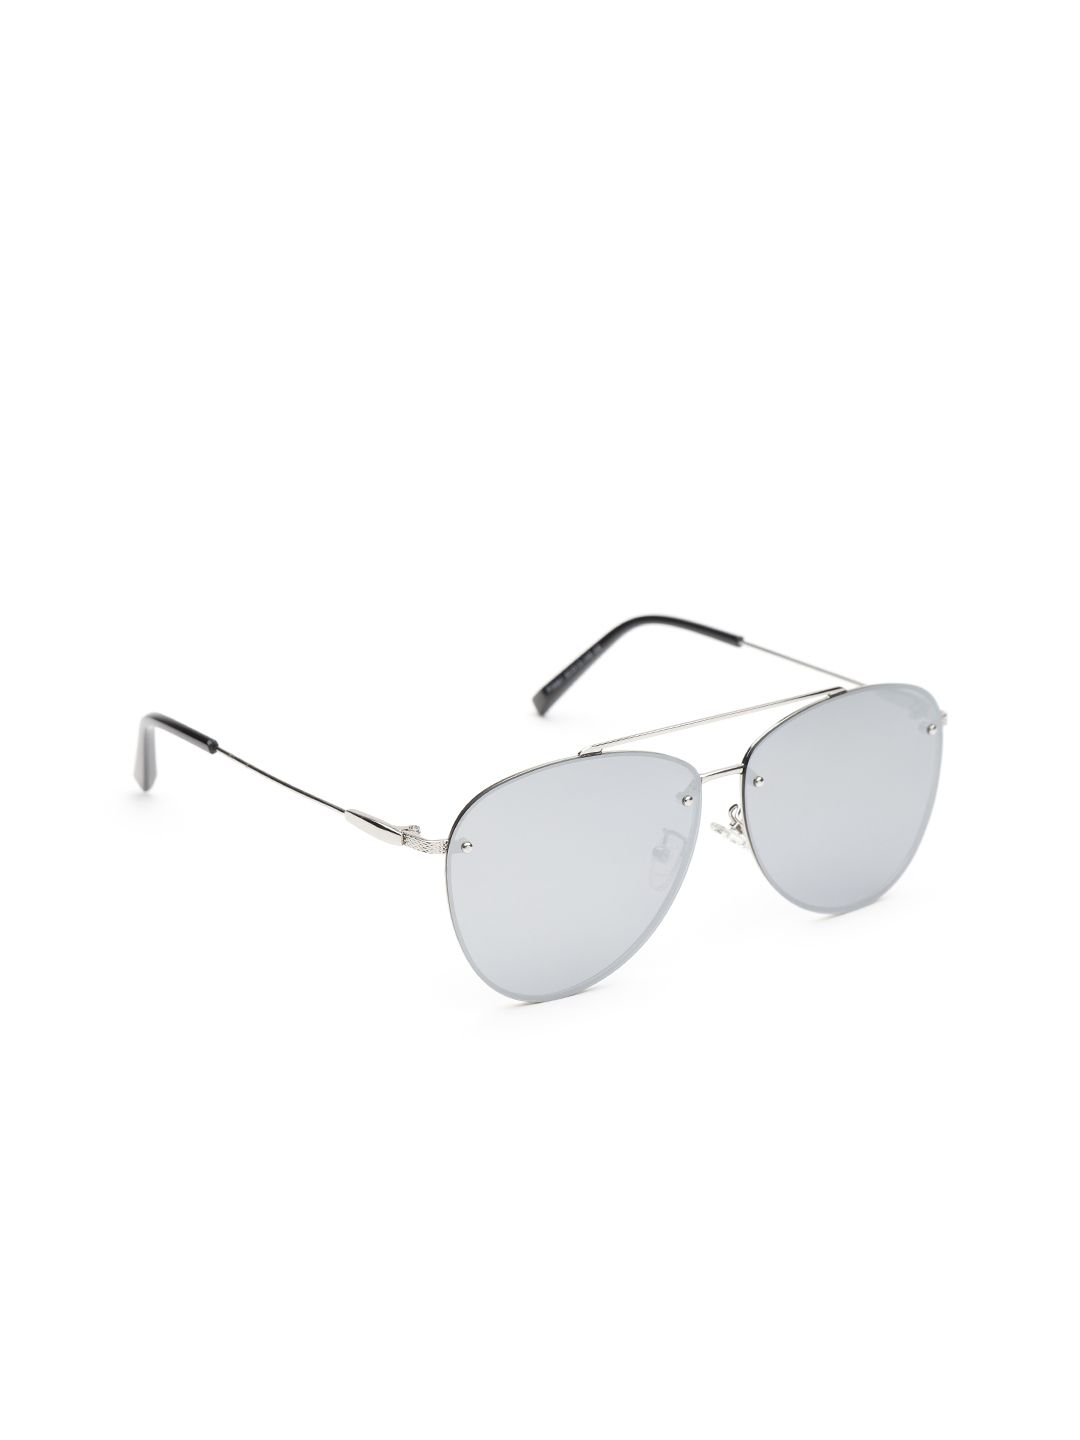 Carlton London Women Mirrored & Polarised Oval Sunglasses 0981-C5 Price in India